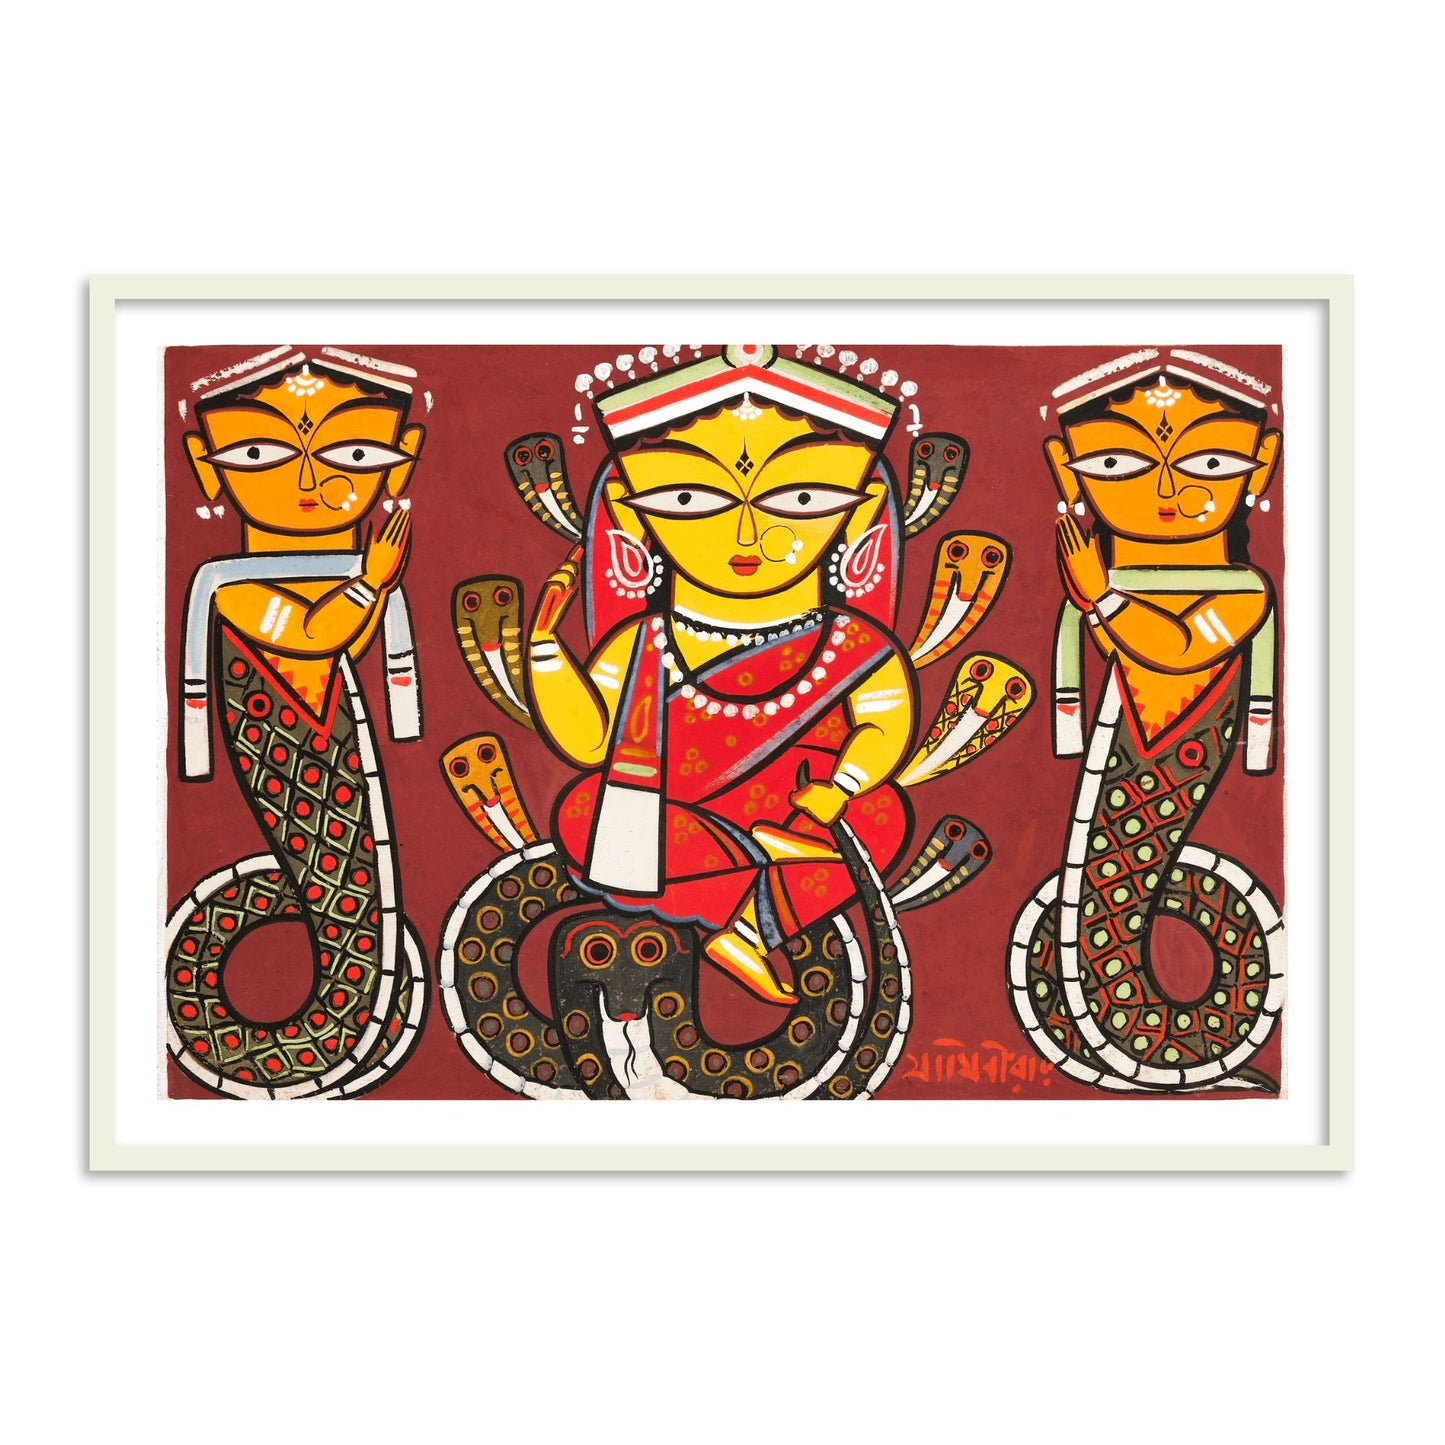 Maa Manasa – Goddess of Snakes Wall Art Painting Print by Jamini Roy for Home Decor